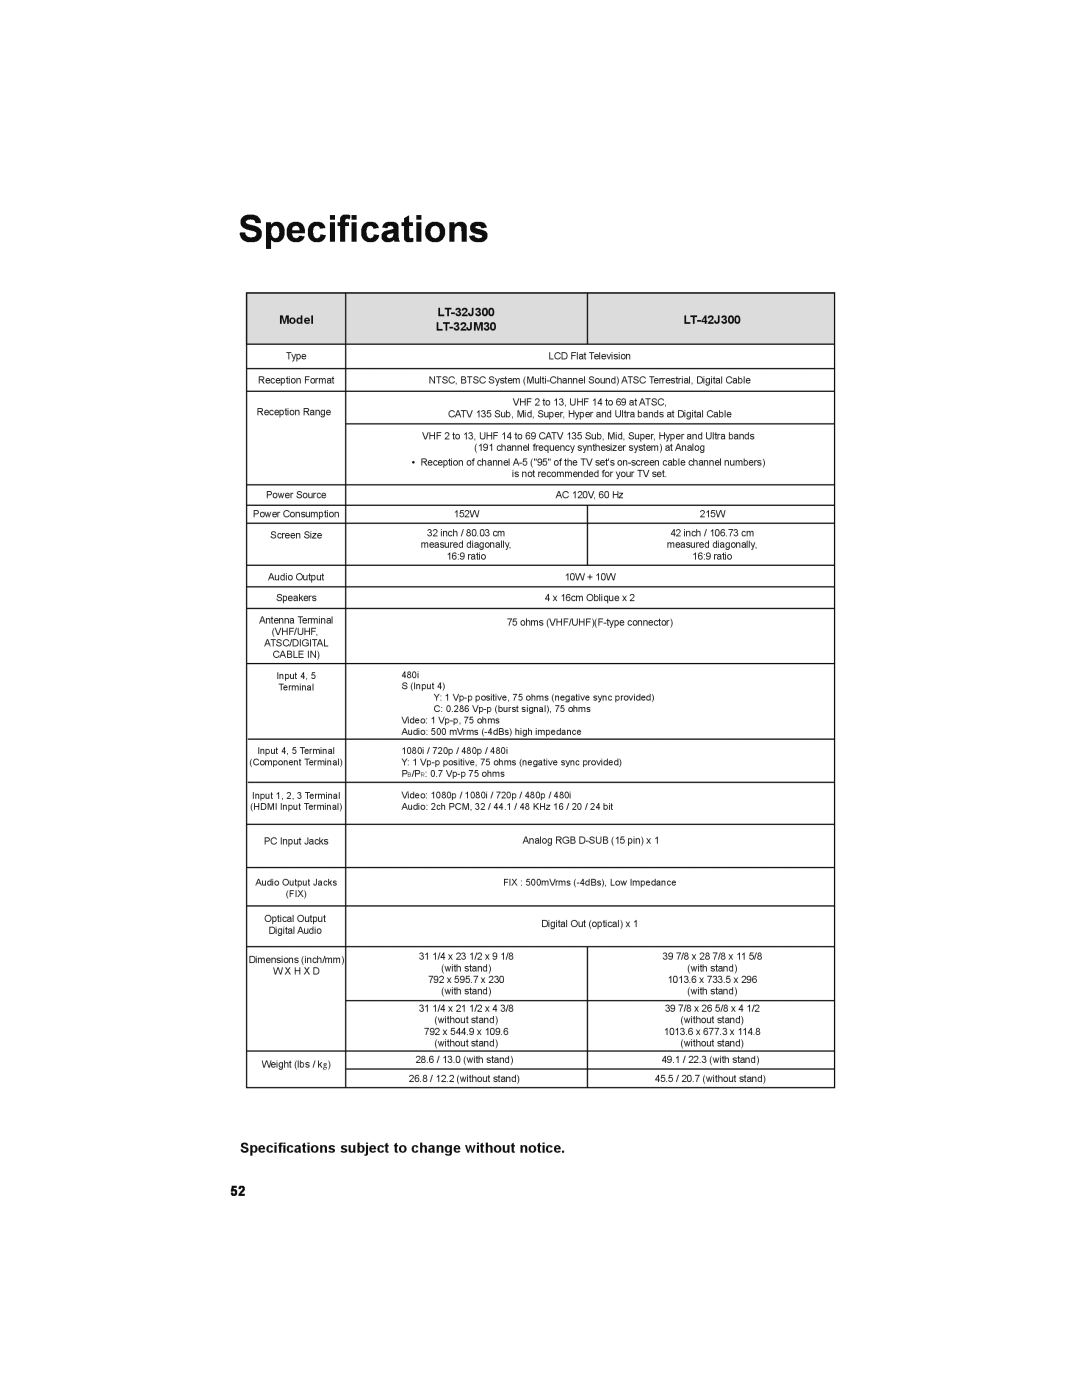 JVC LT-32JM30 manual Speciﬁcations, Specifications subject to change without notice, Model, LT-32J300, LT-42J300 